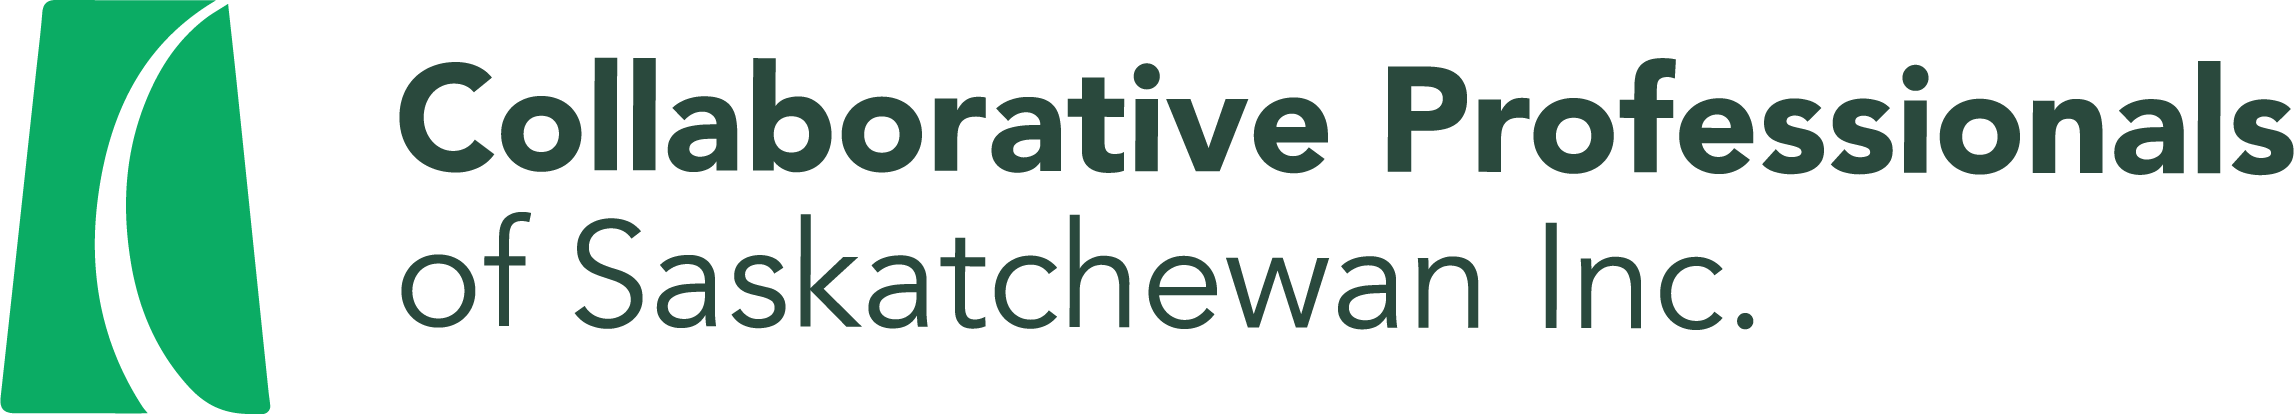 Collaborative Professionals of Saskatchewan Inc.